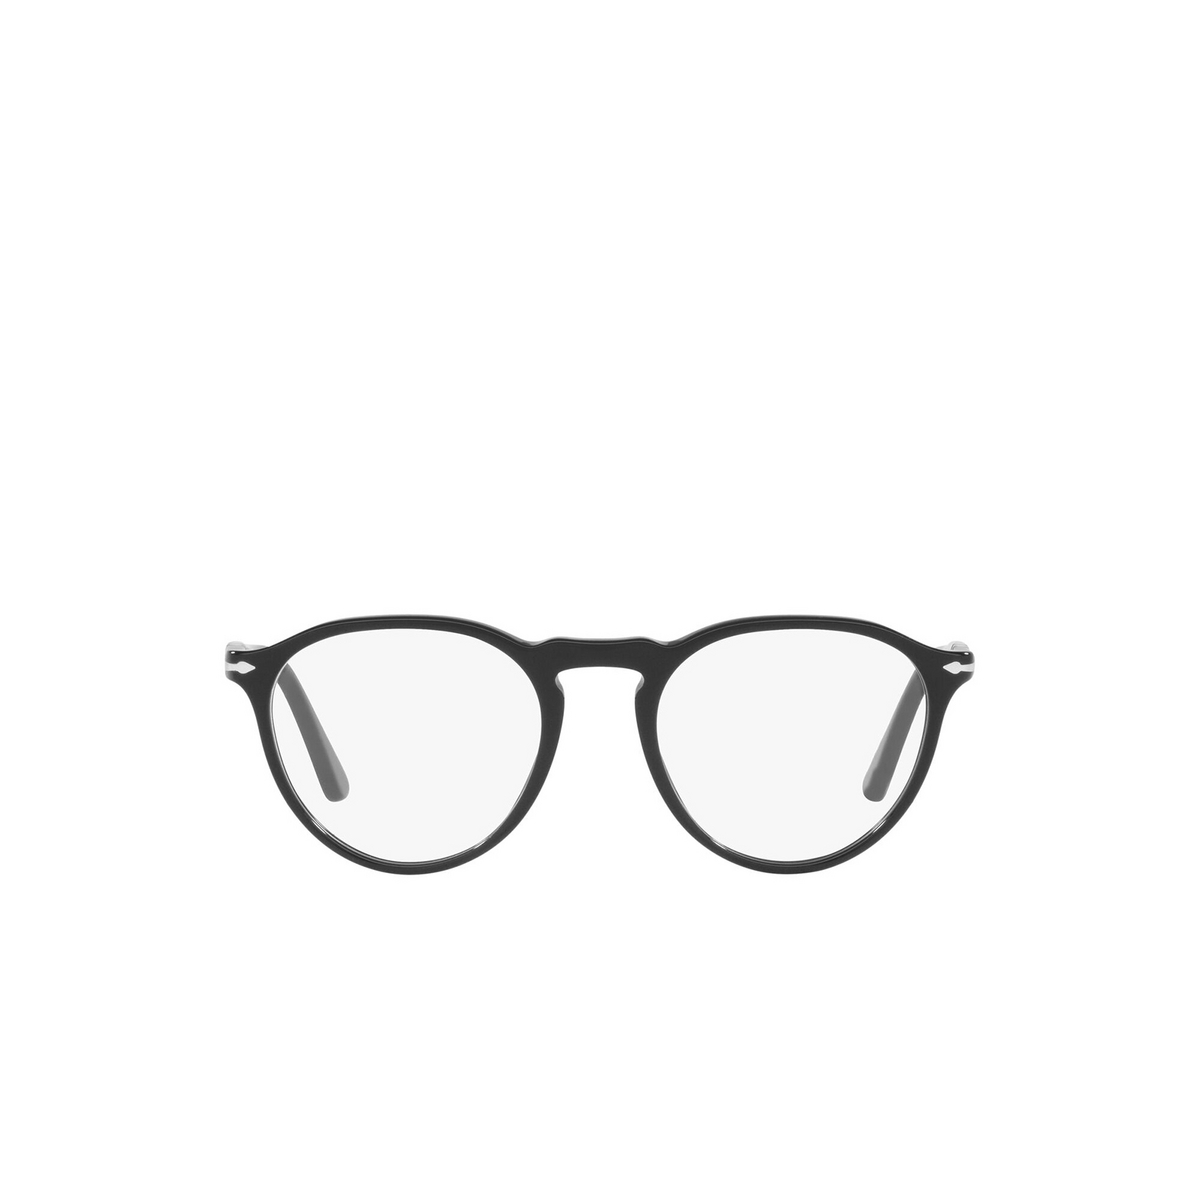 Persol® Round Eyeglasses: PO3286V color Black 95 - front view.